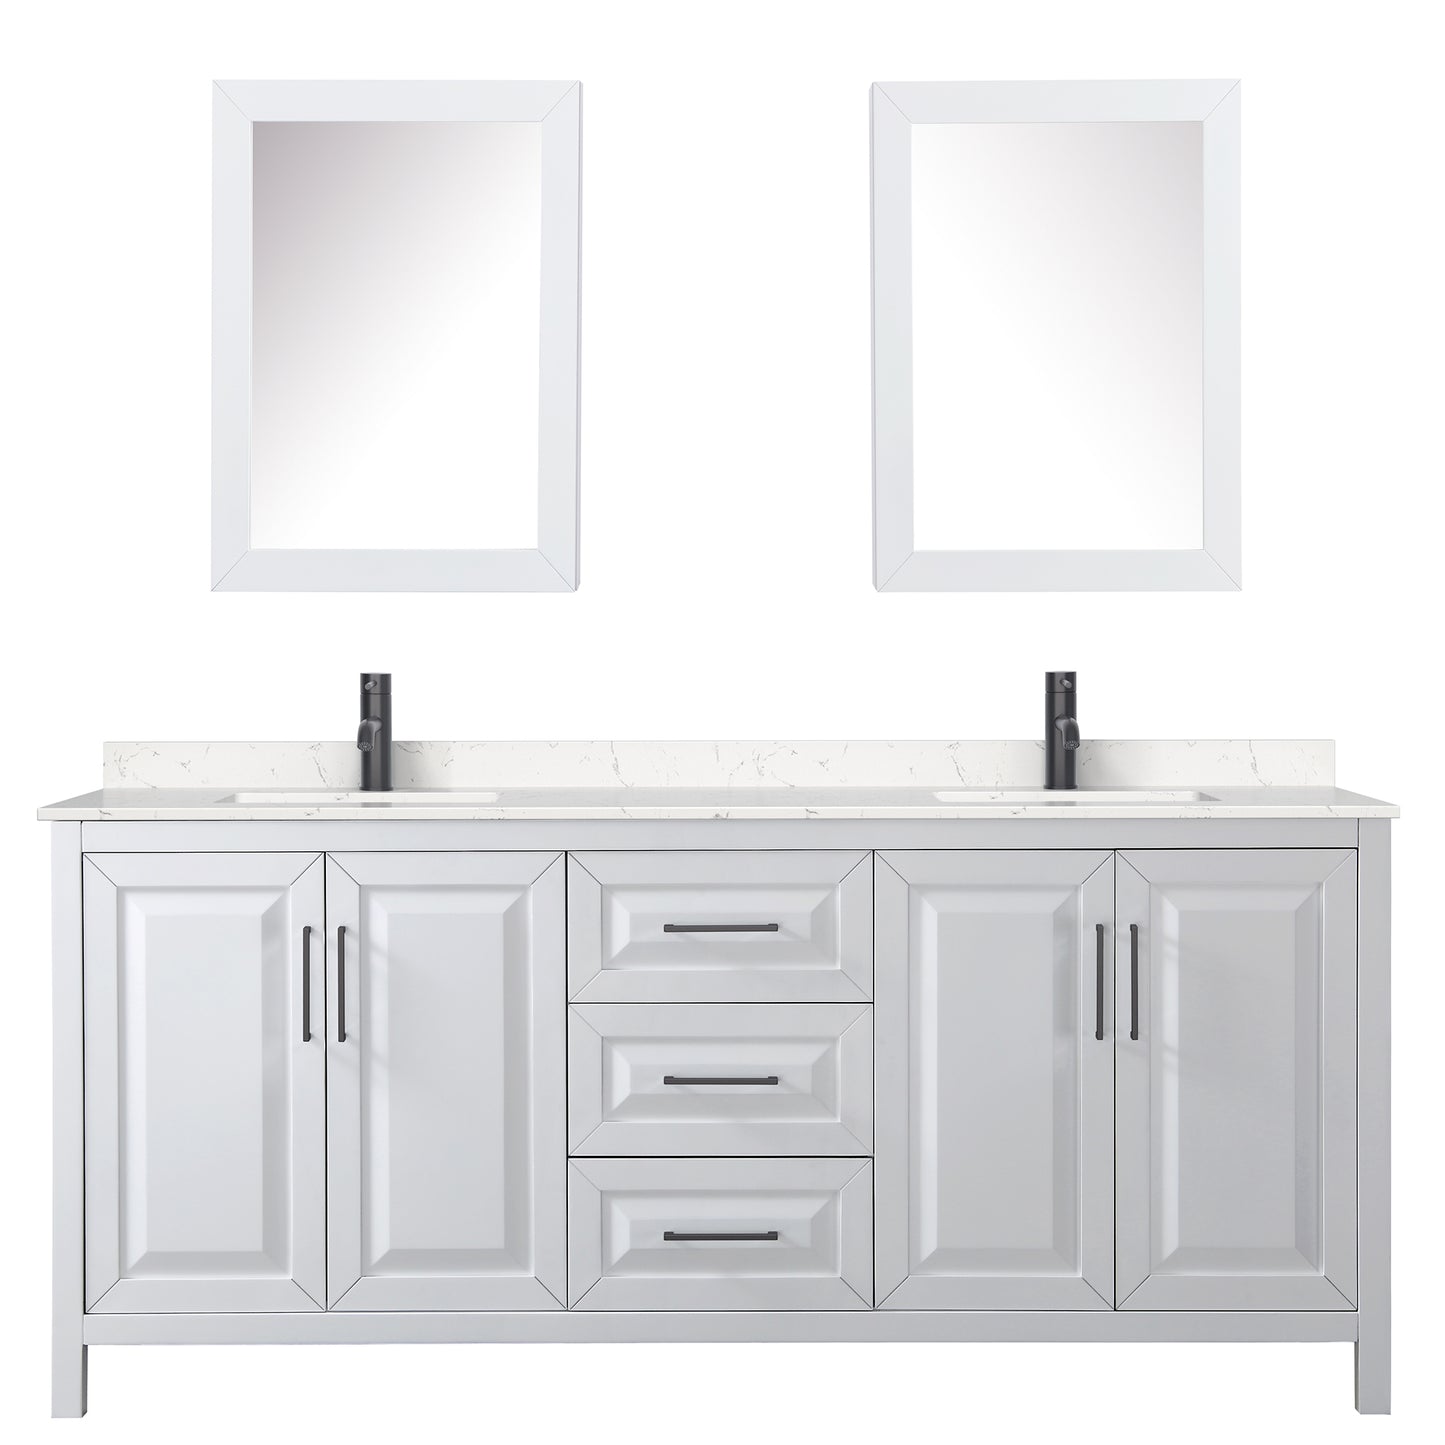 Wyndham Daria 80 Inch Double Bathroom Vanity Light-Vein Carrara Cultured Marble Countertop, Undermount Square Sinks in Matte Black Trim with Medicine Cabinets - Luxe Bathroom Vanities